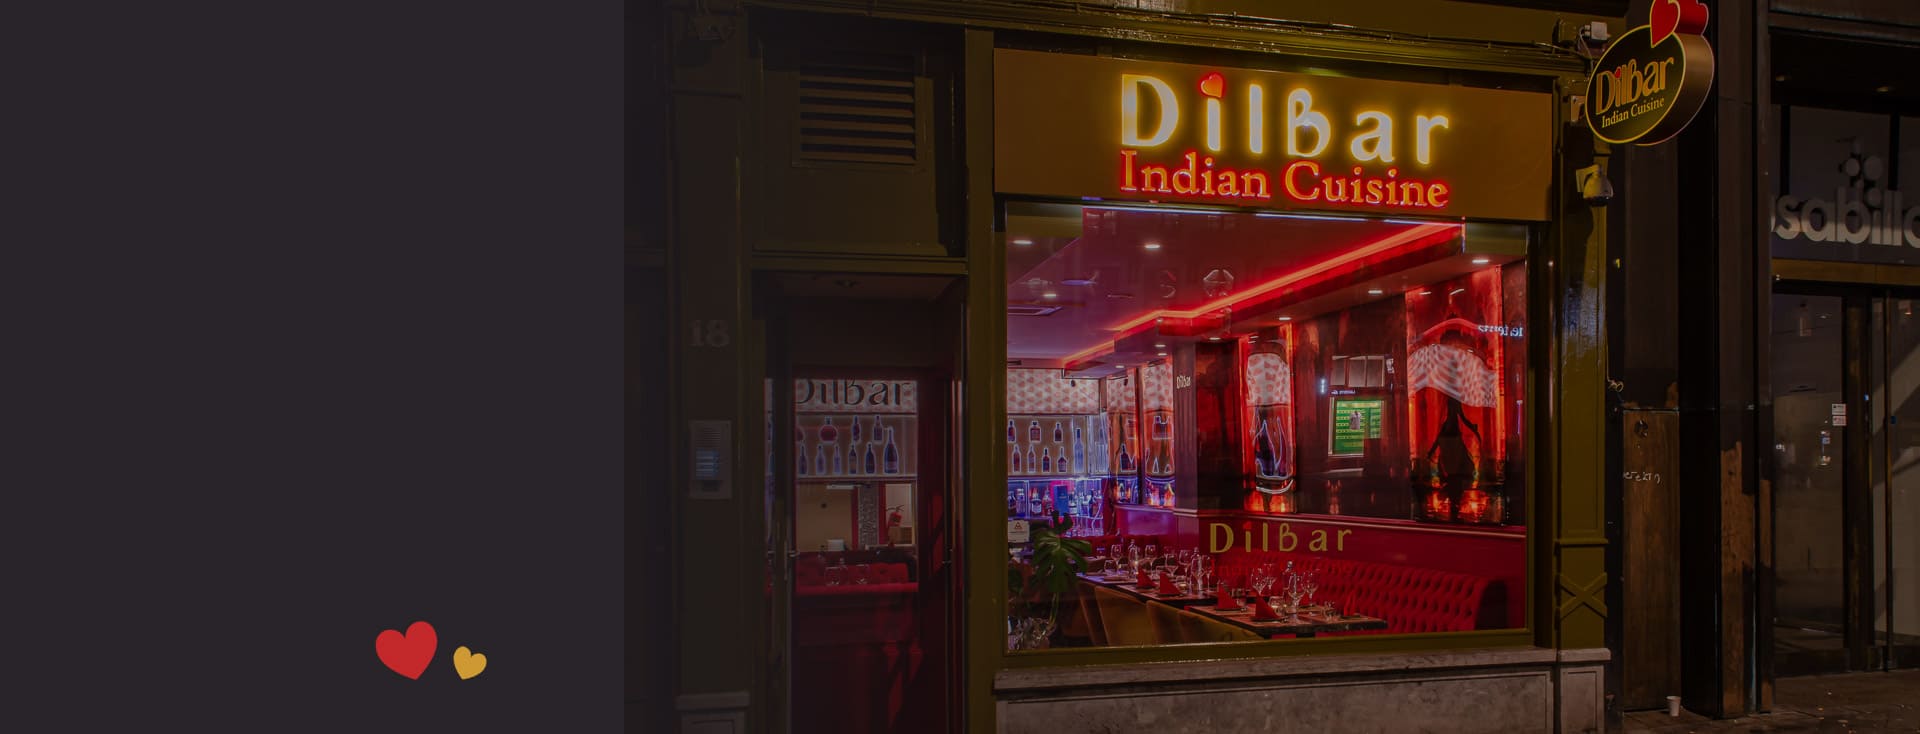 Indian Restaurant Near shopping street (kalverstraat)